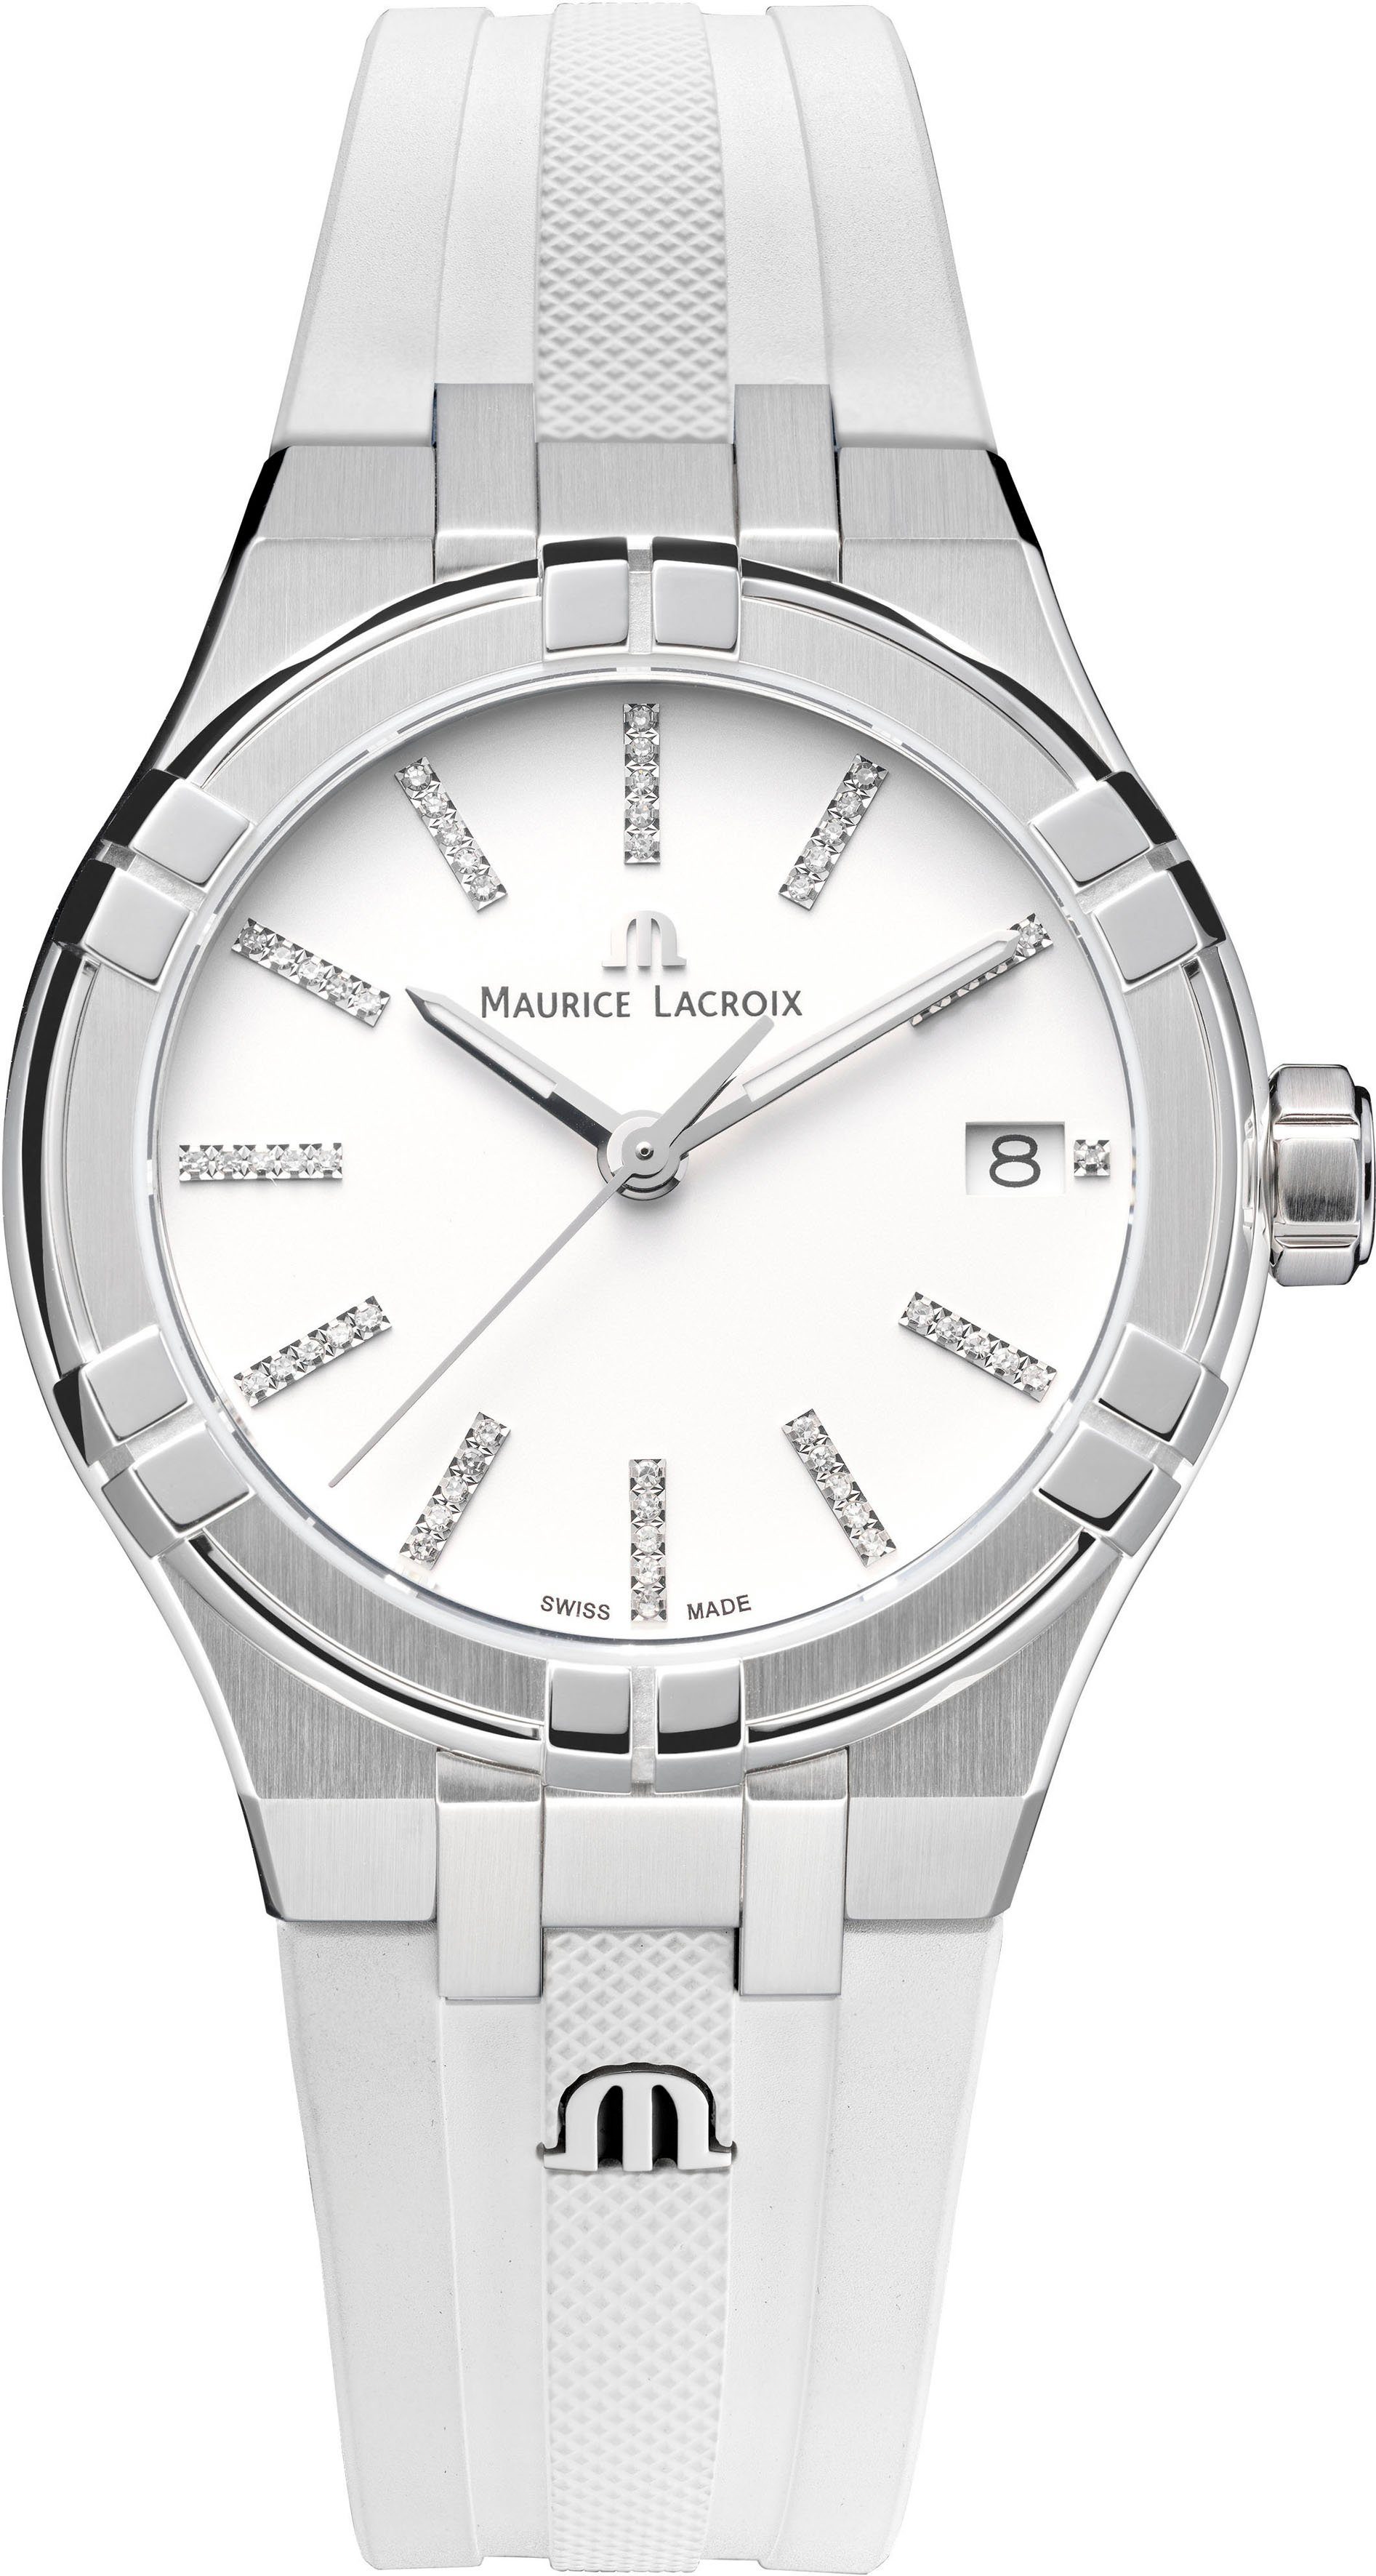 Schweizer AI1106-SS000-150-7, LACROIX Date, MAURICE Uhr Diamanten Aikon